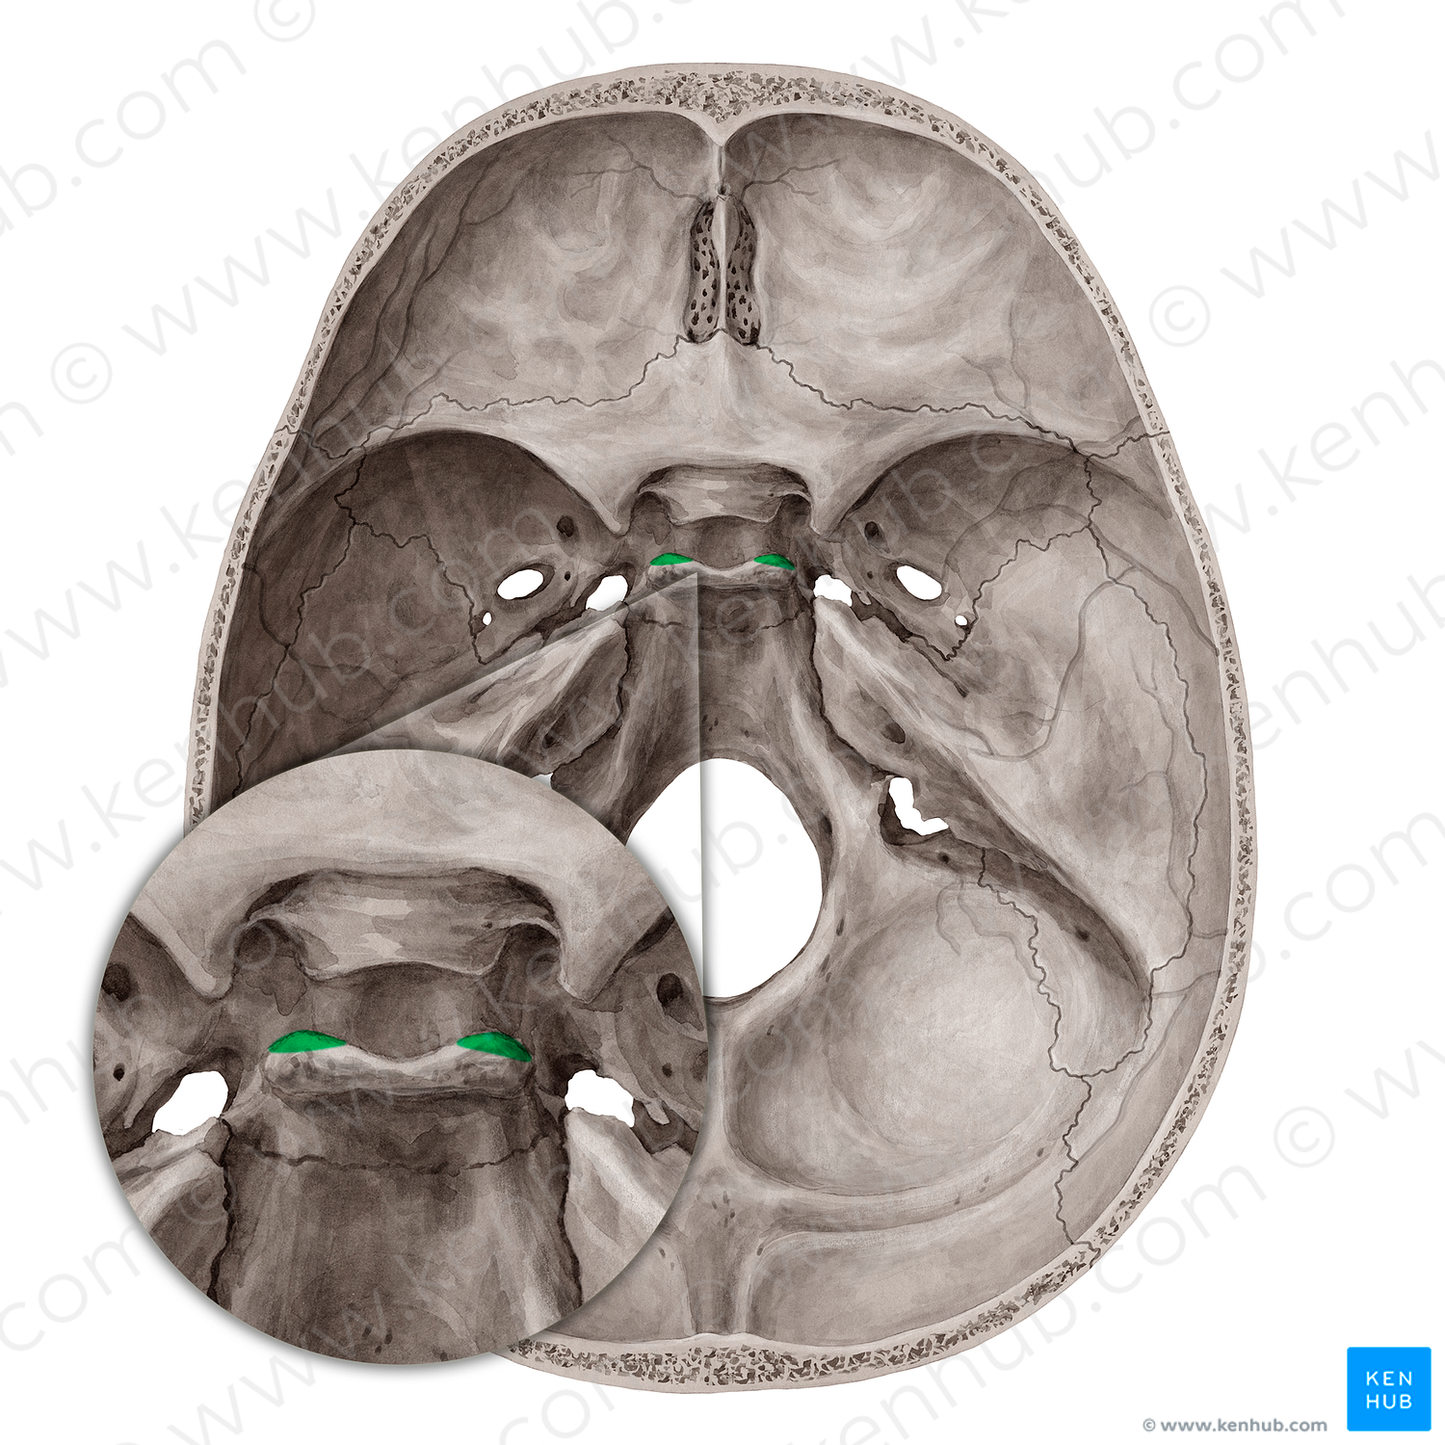 Posterior clinoid process of sphenoid bone (#8190)